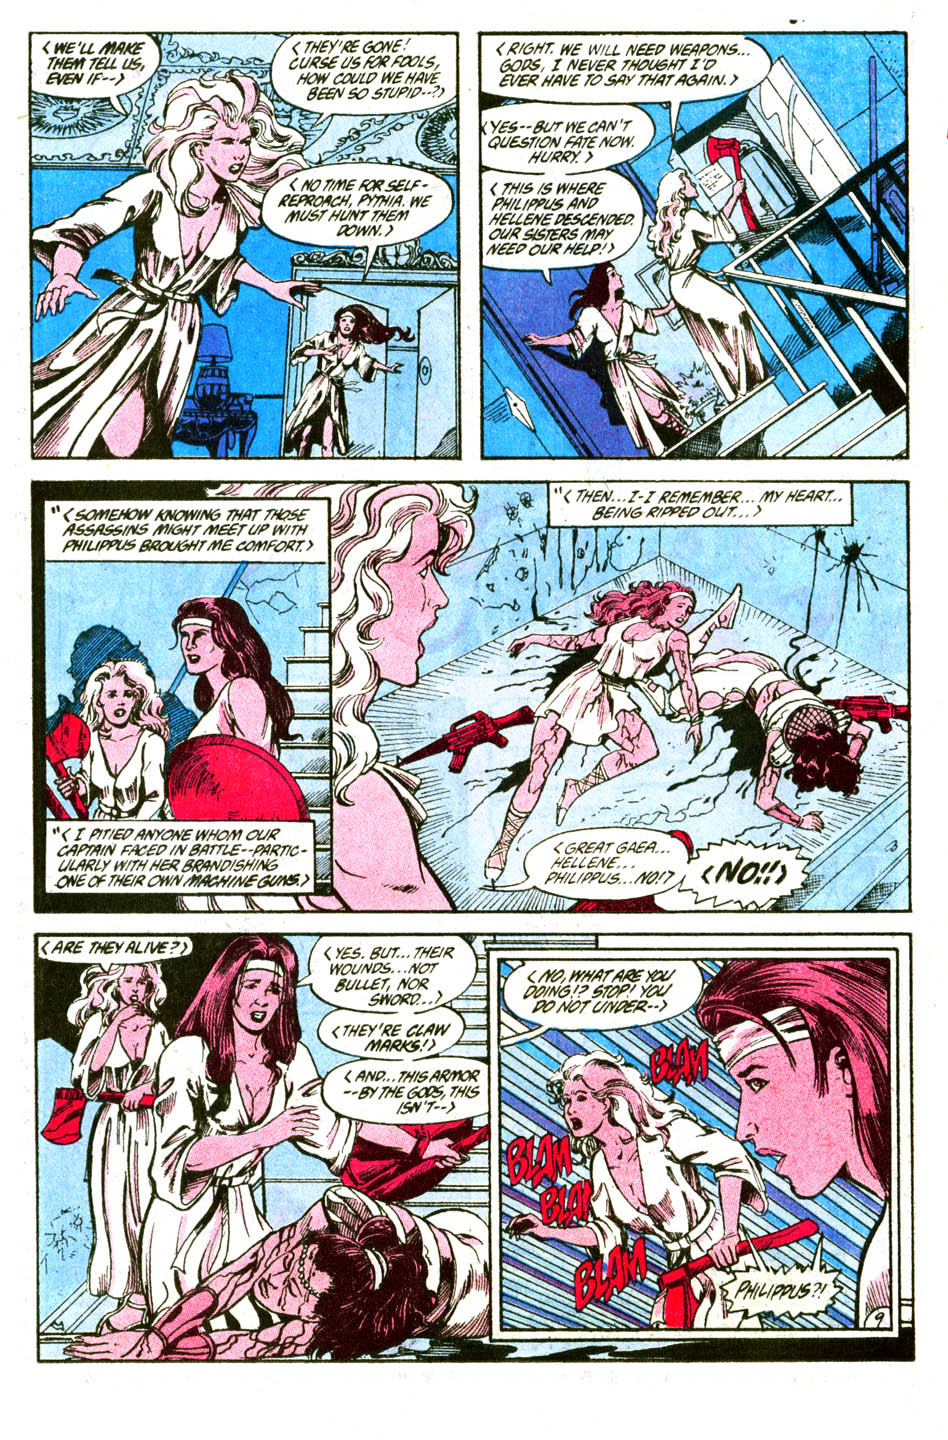 Wonder Woman (1987) 56 Page 10